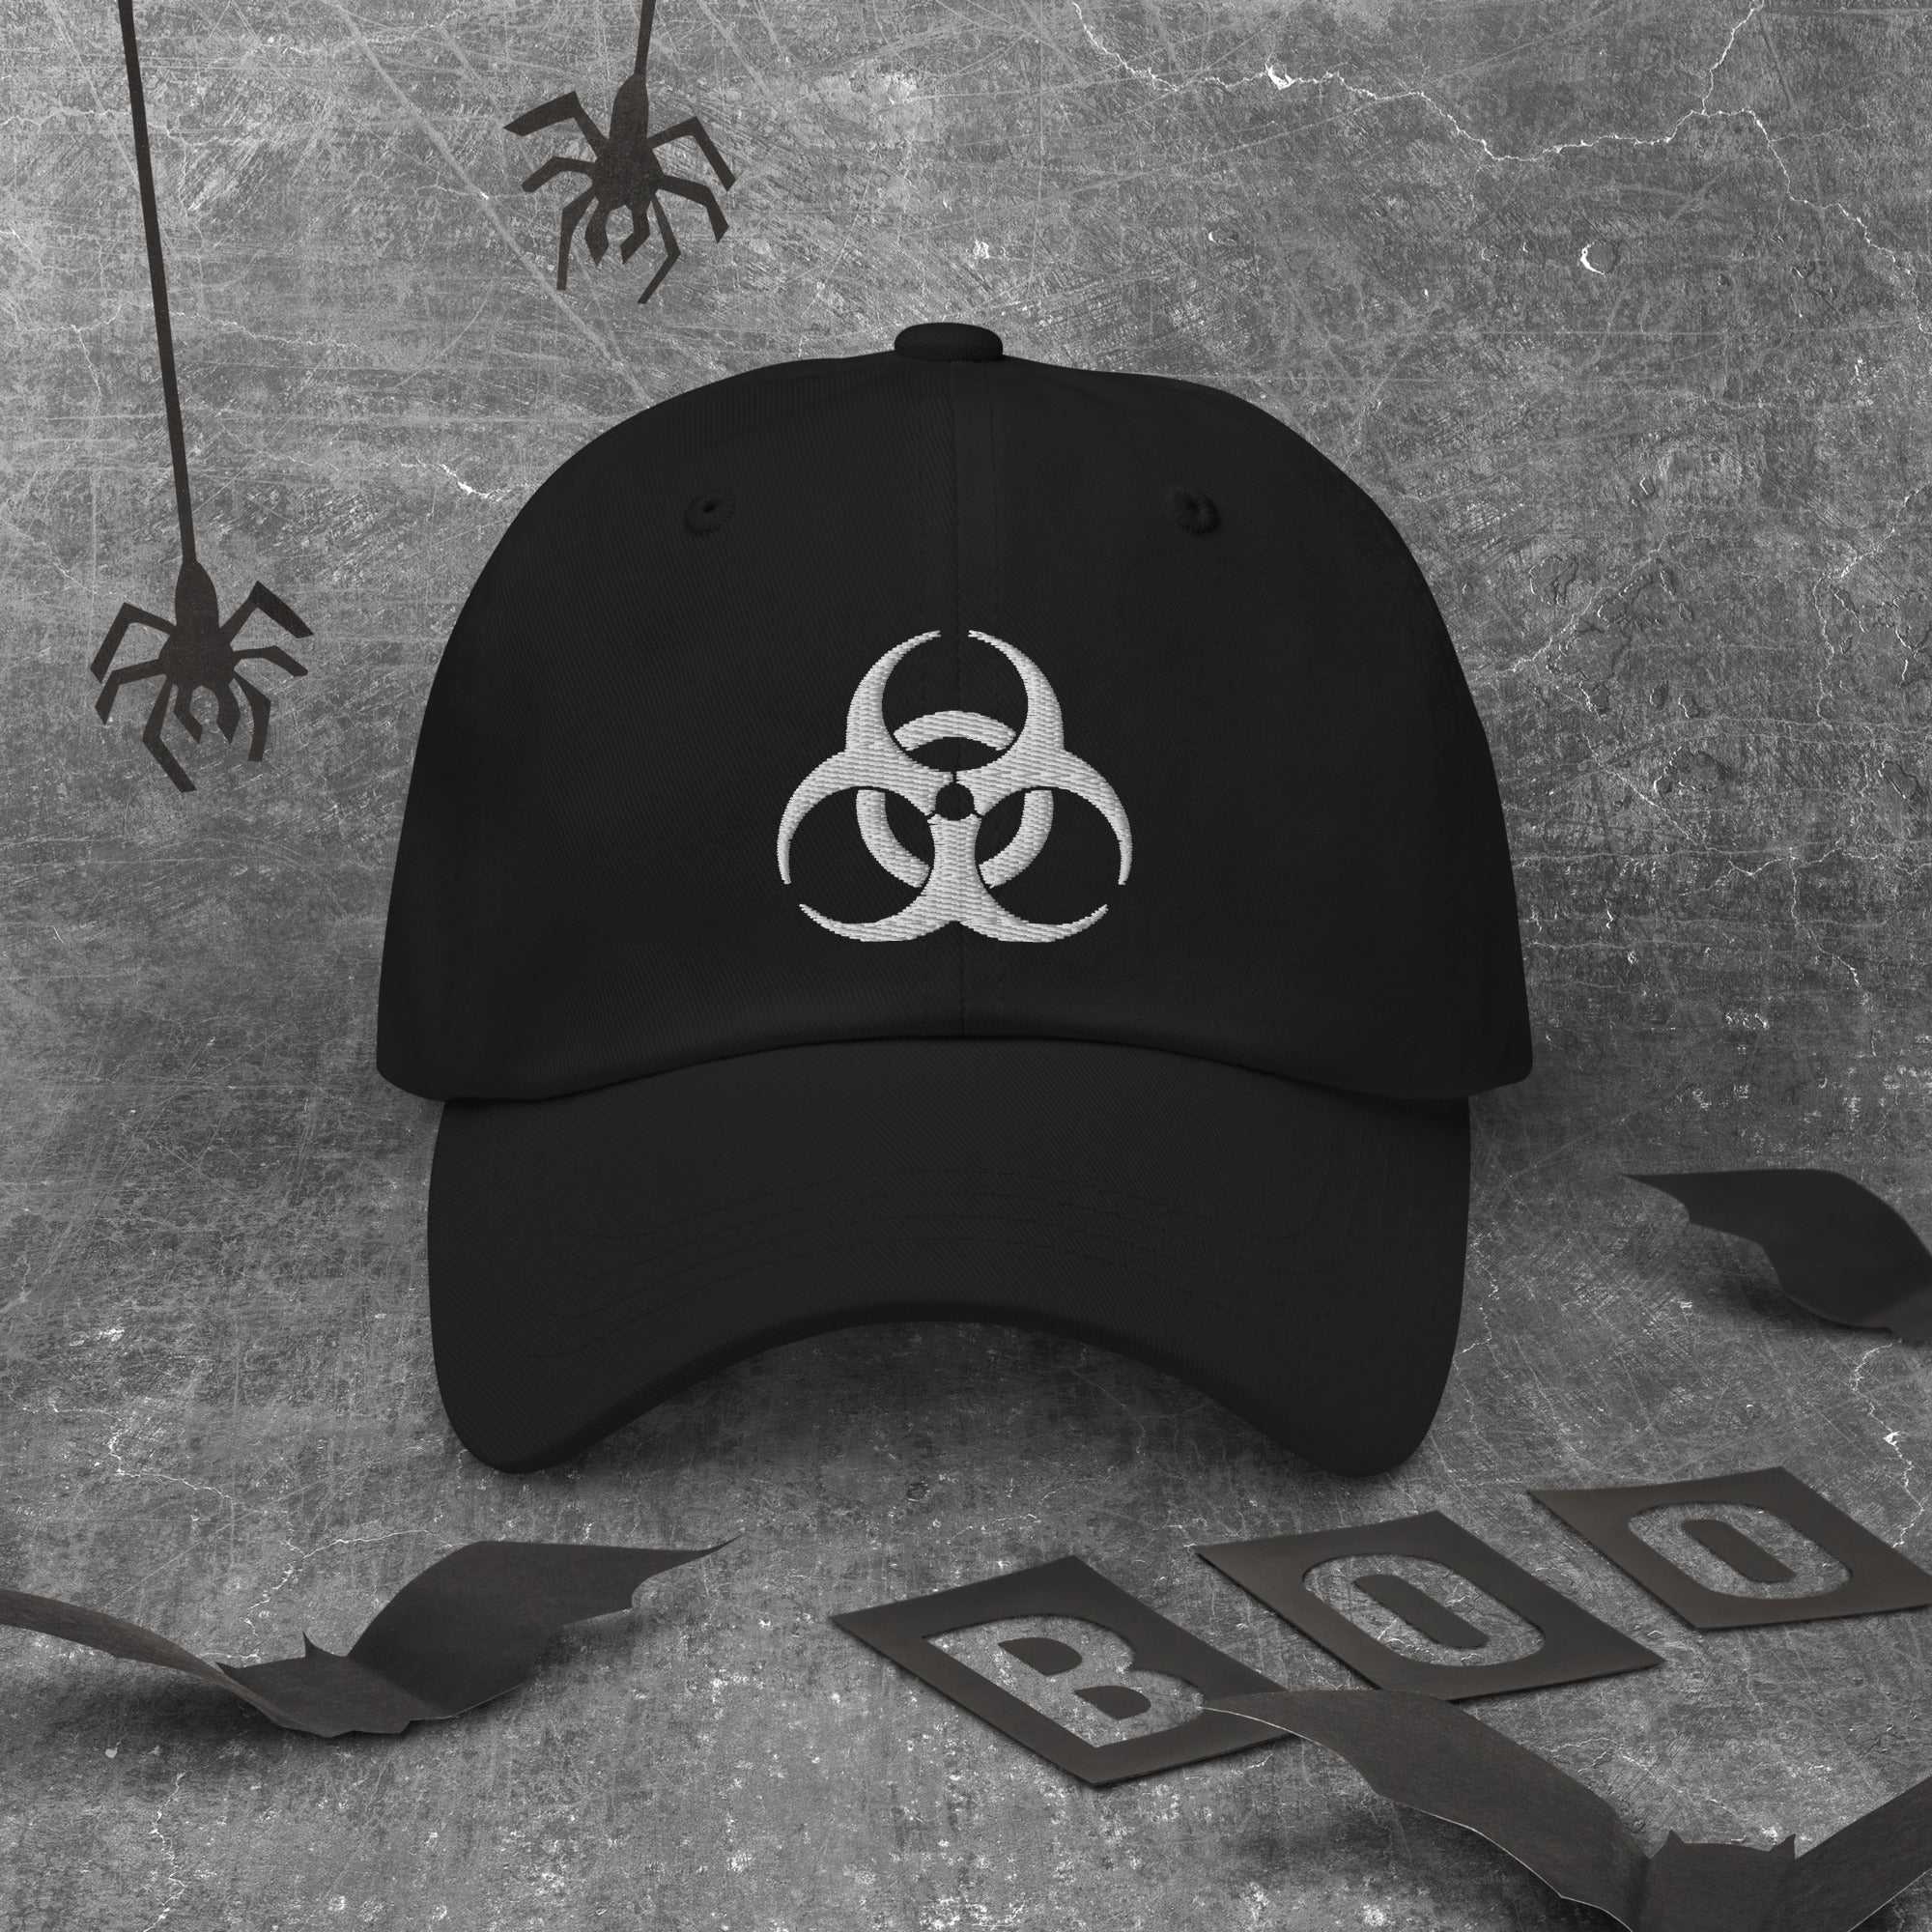 White Thread Bio Hazard Symbol Warning Sign Embroidered Baseball Cap Dad hat Zombie - Edge of Life Designs